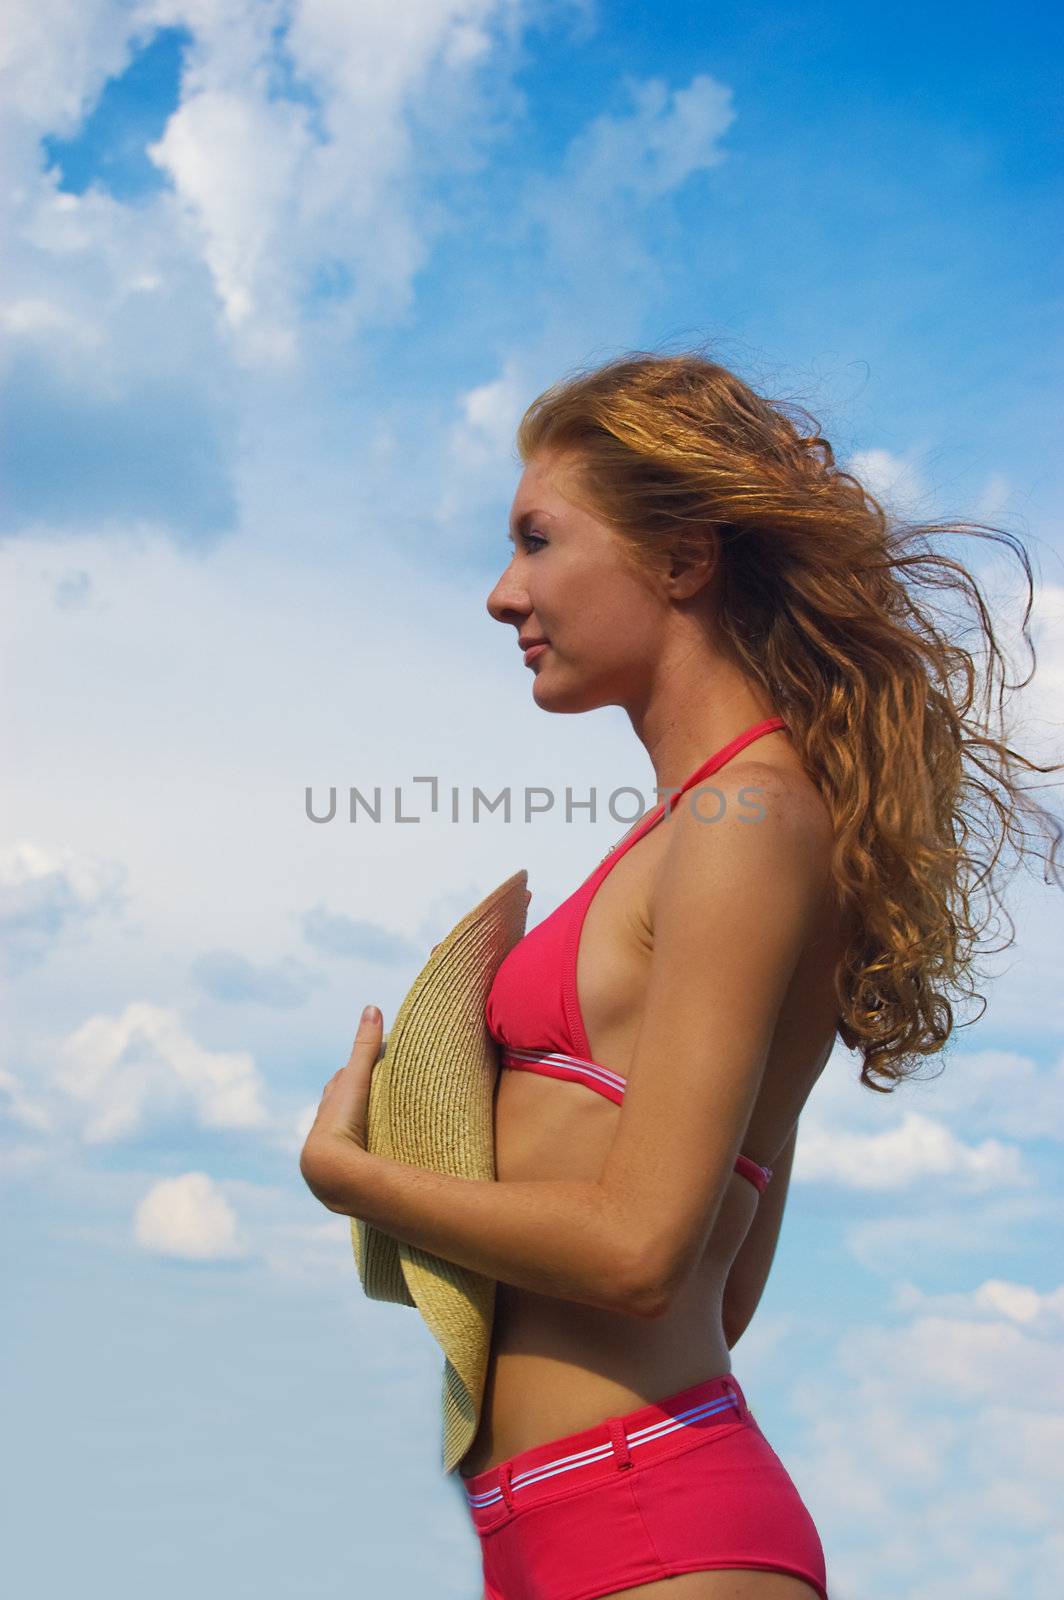 Woman in bikini with flying hair over dramatic sky